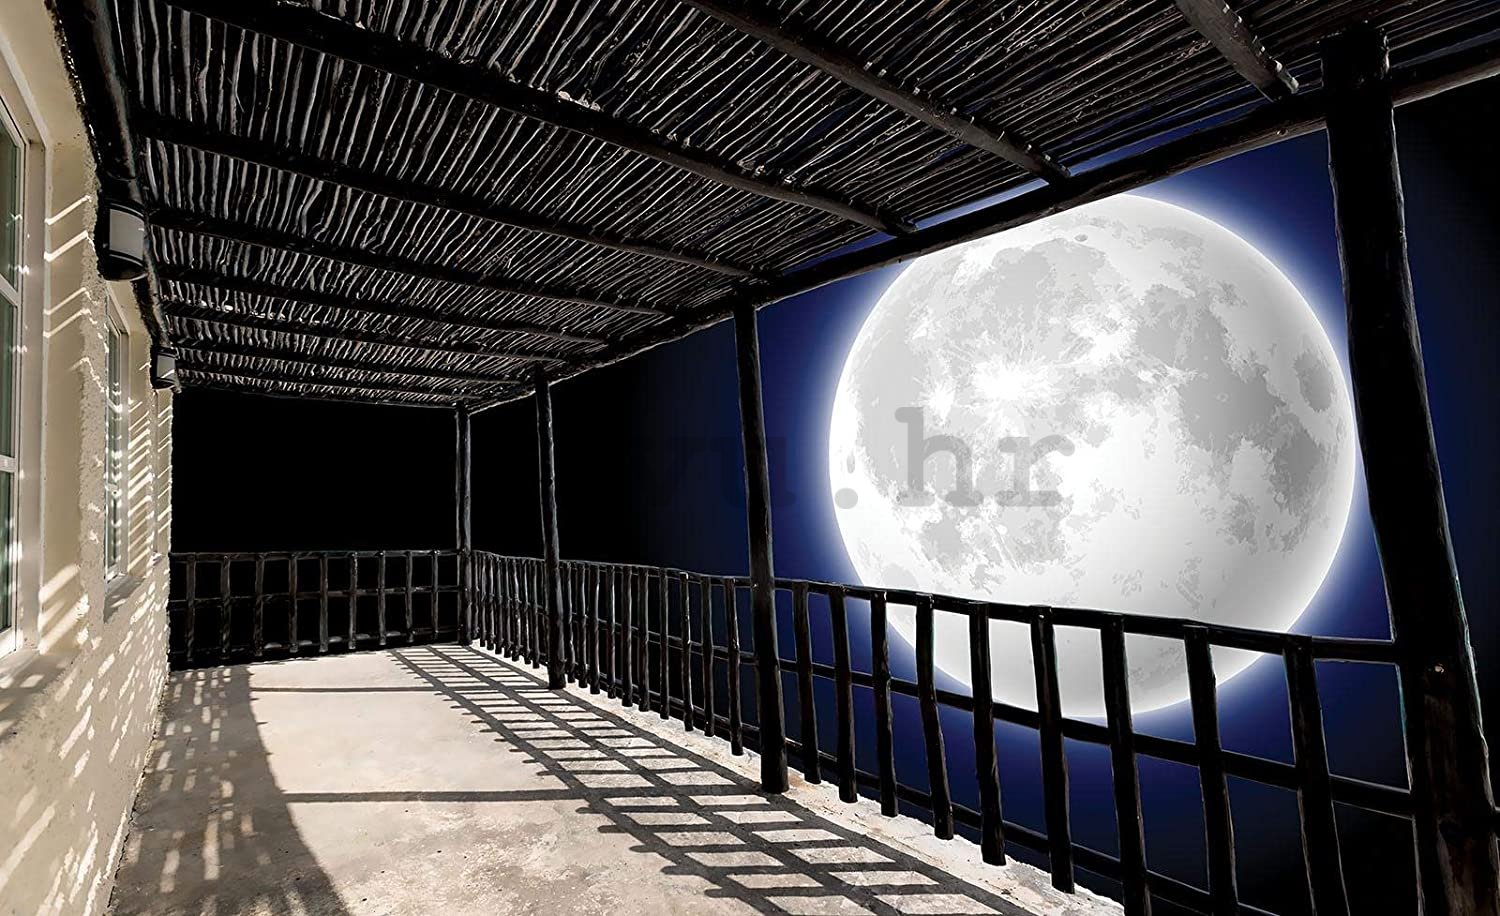 Foto tapeta Vlies: Mjesec iza trijema - 254x184 cm